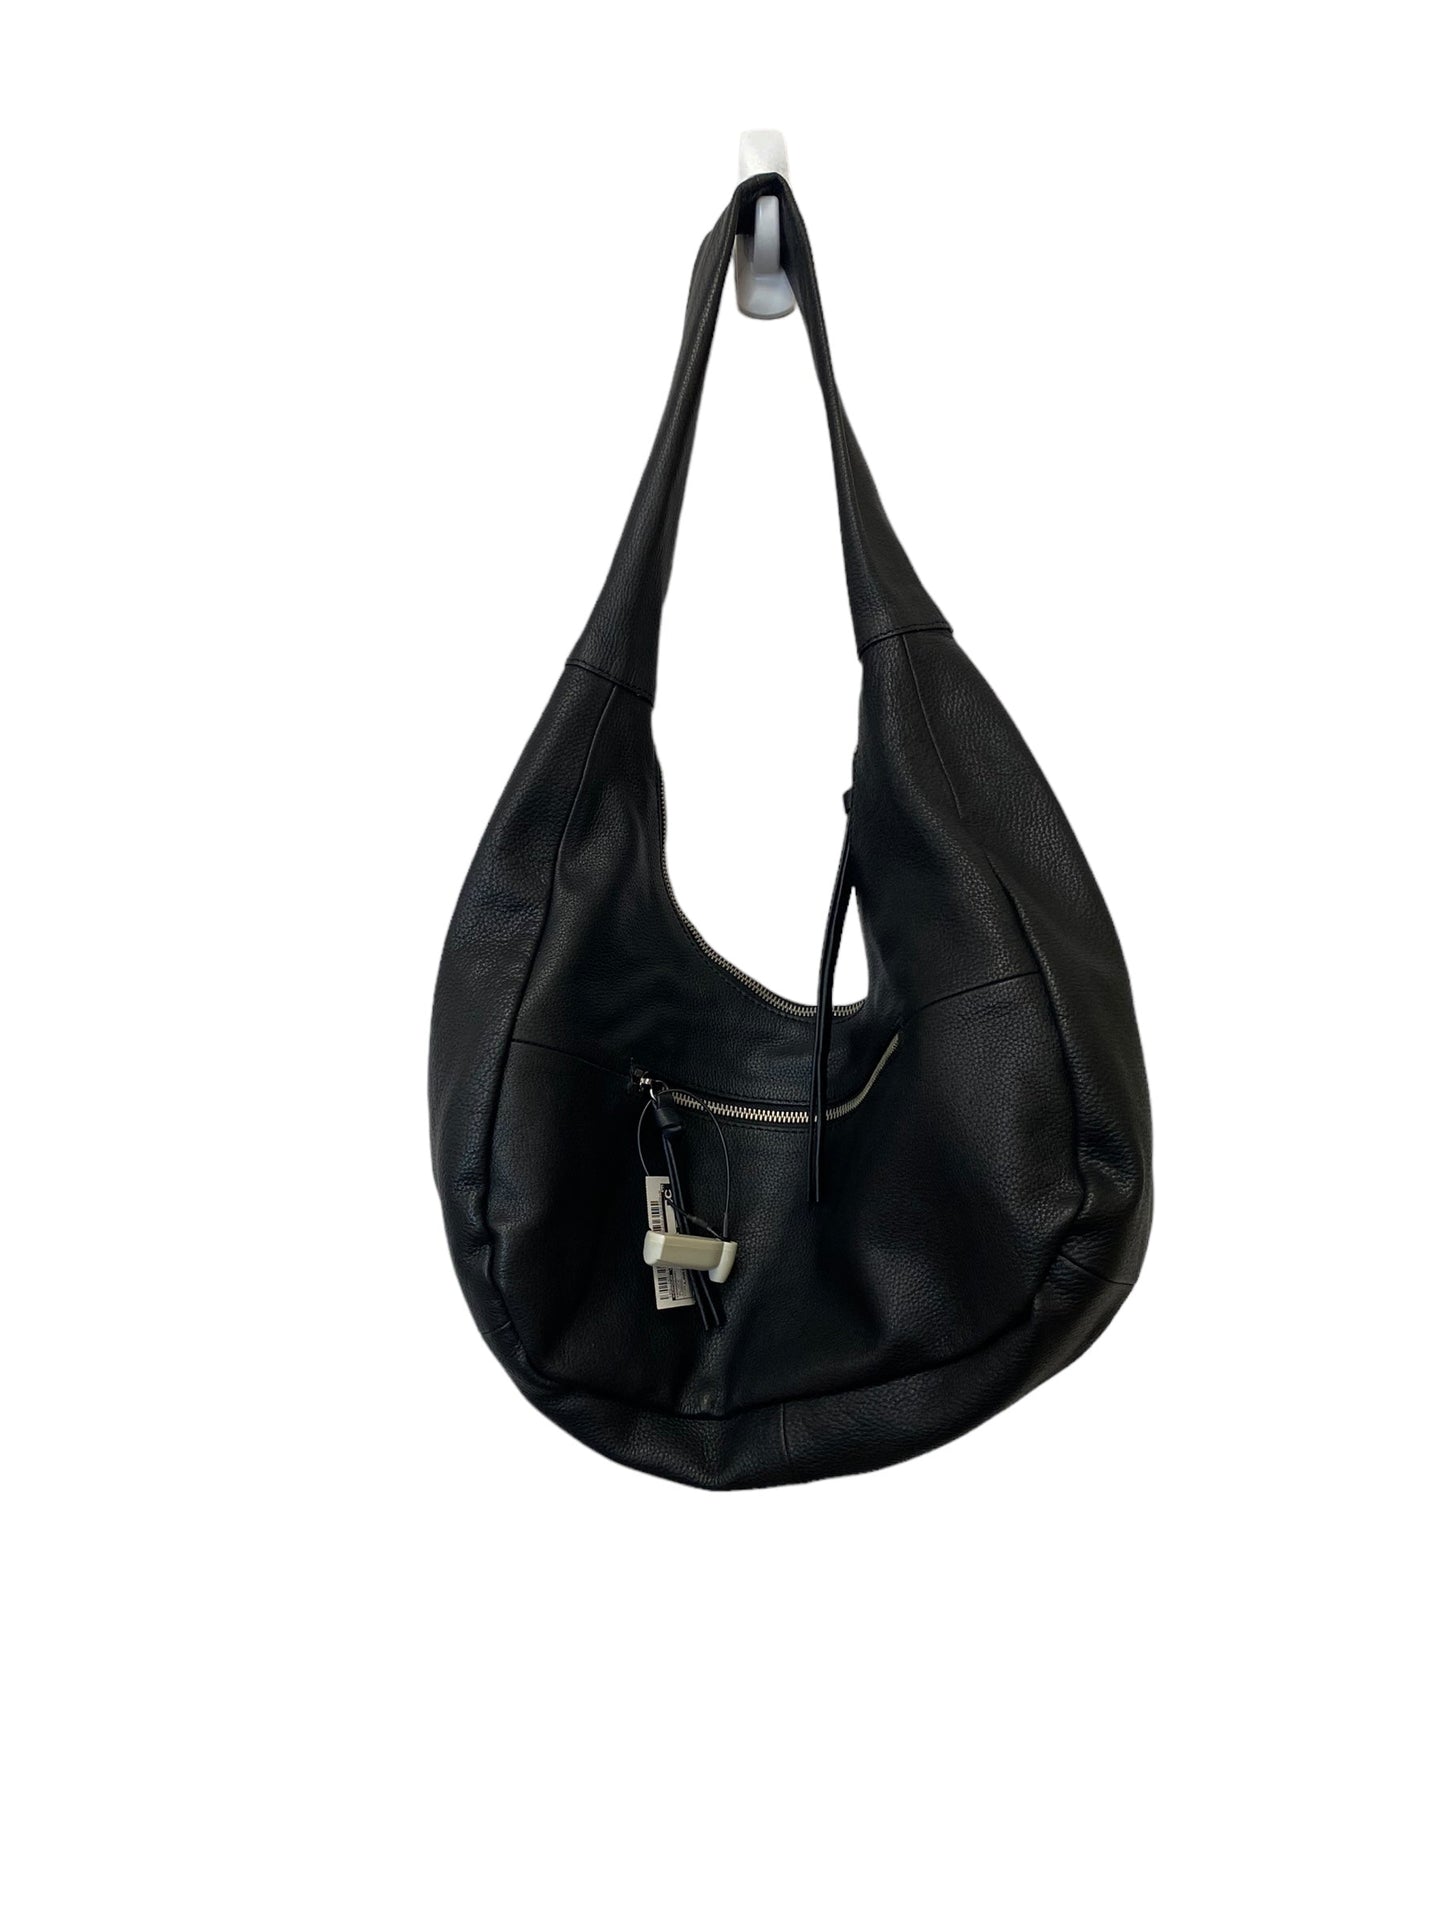 Handbag By Crown Vintage  Size: Large